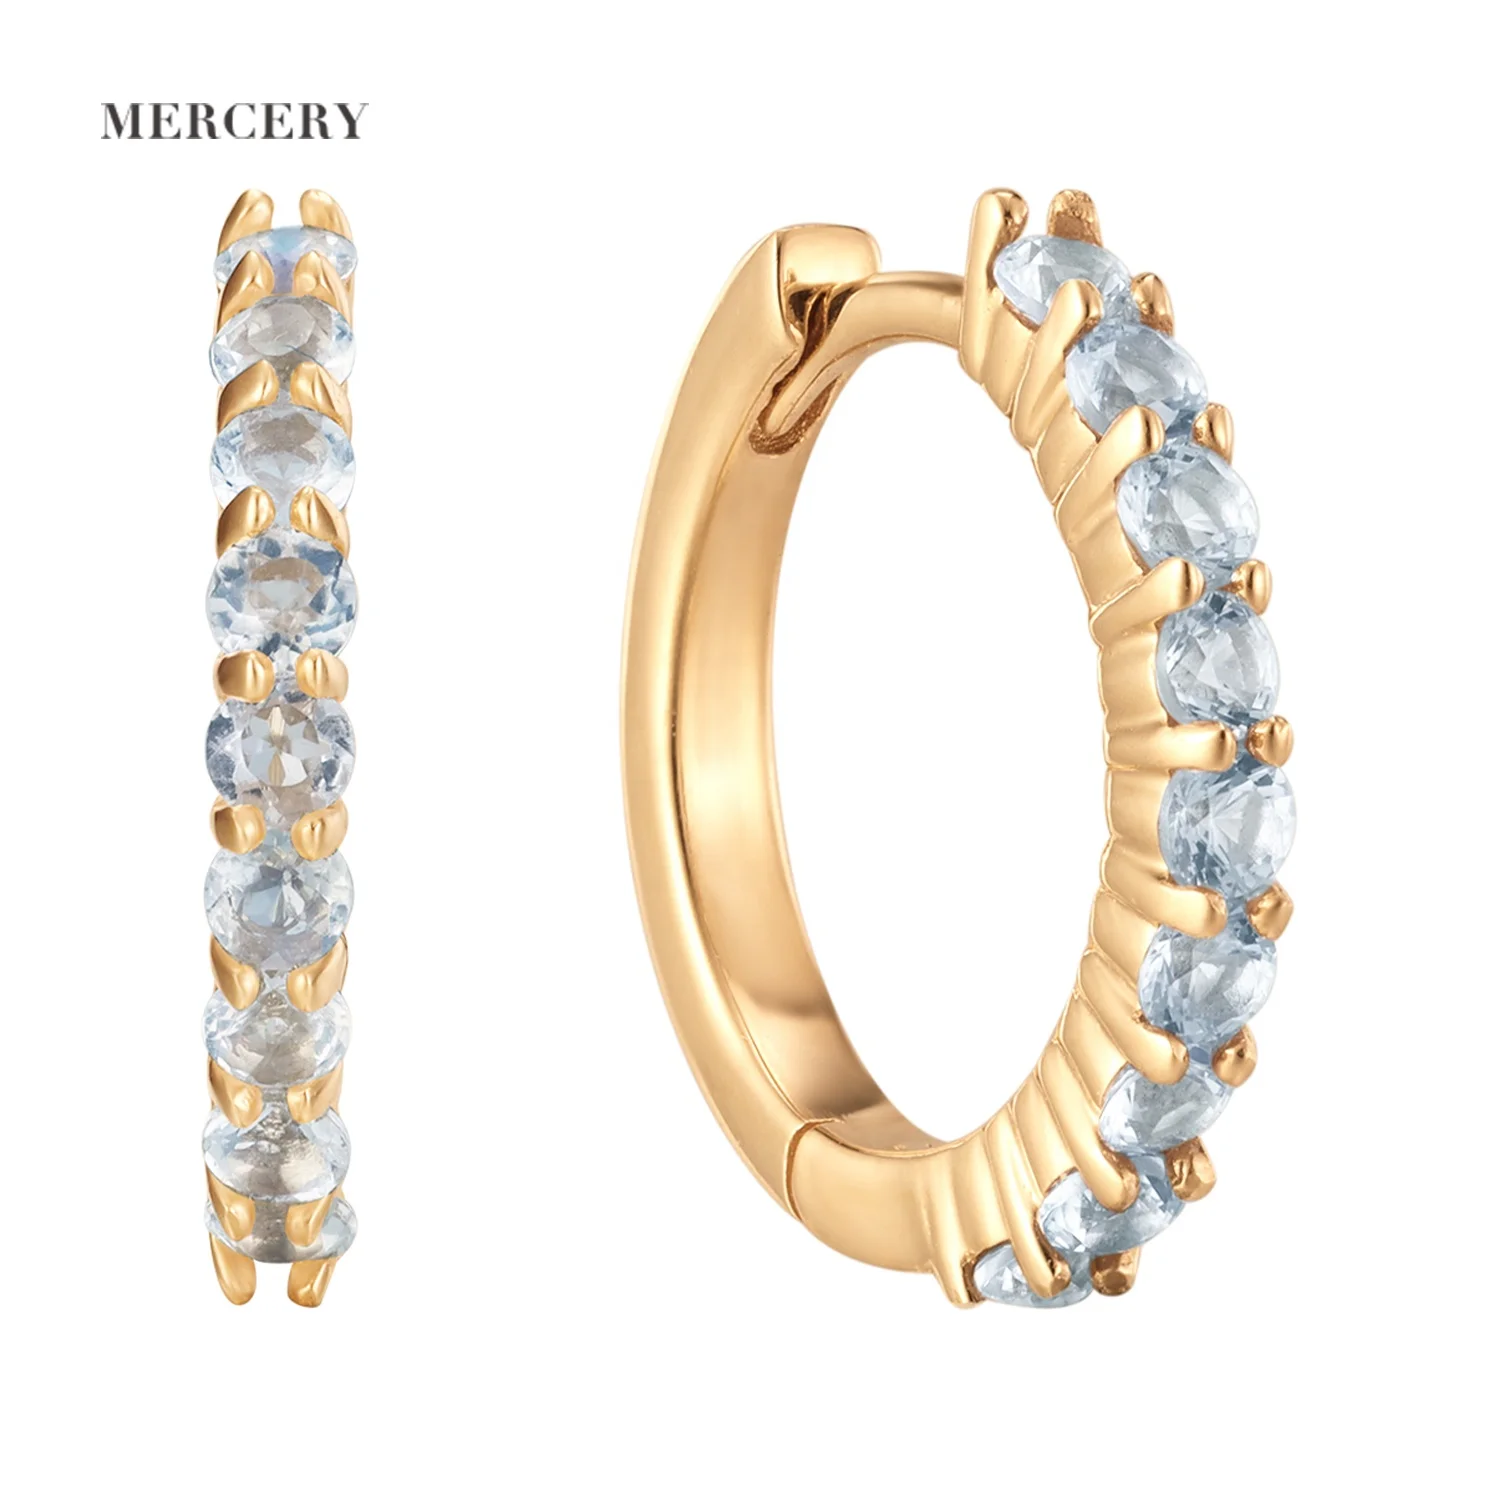 

Mercery Dainty Personalized Healing Stones Jewelry June Birthstone Moonstone Bling Earrings 14k Solid Gold Huggie Hoop Earring